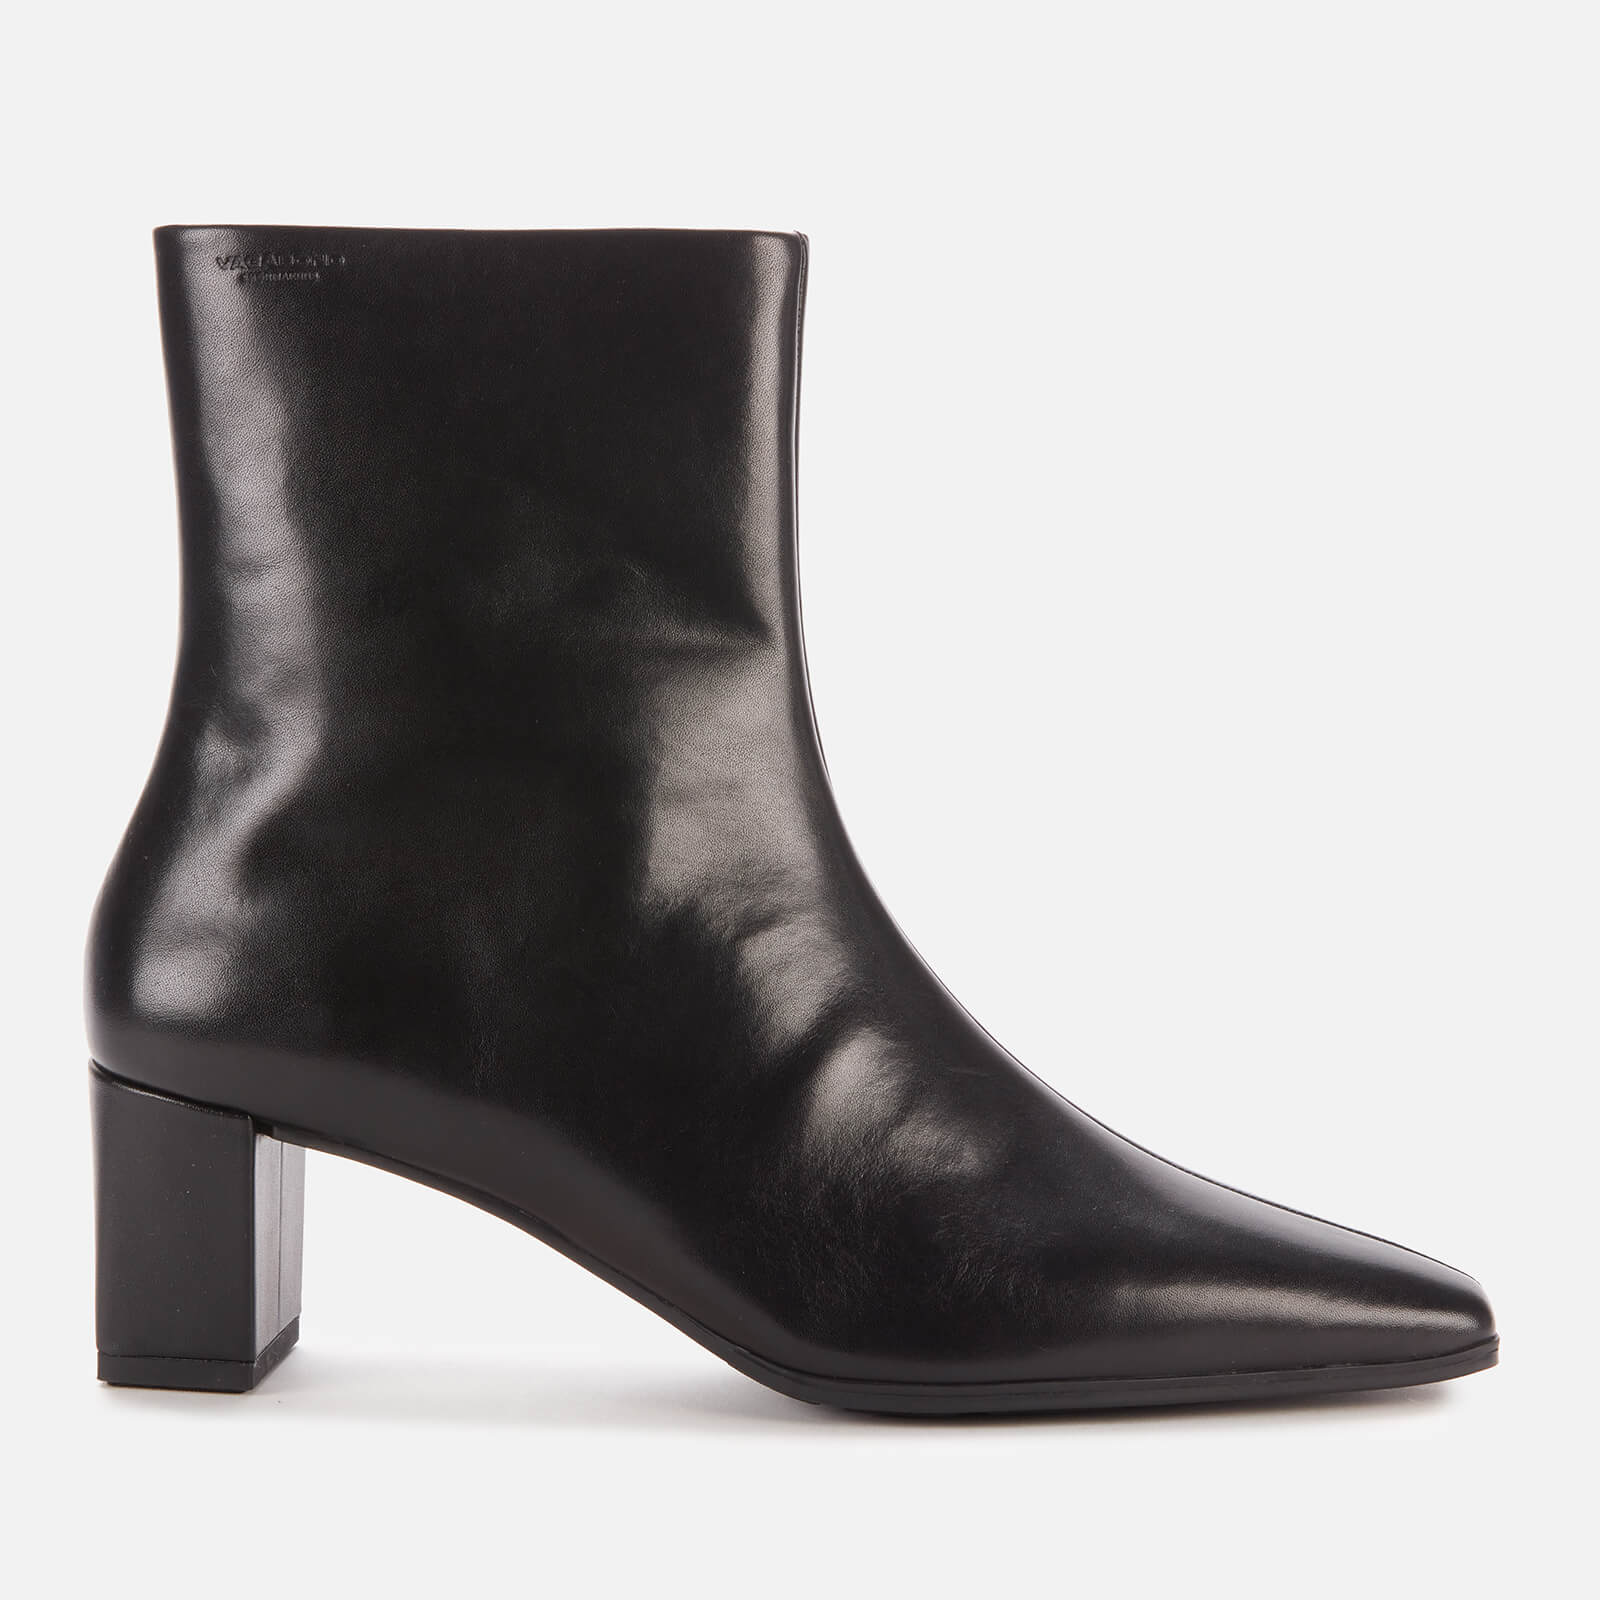 Vagabond Women's Tessa Leather Ankle Boots - Black - UK 4